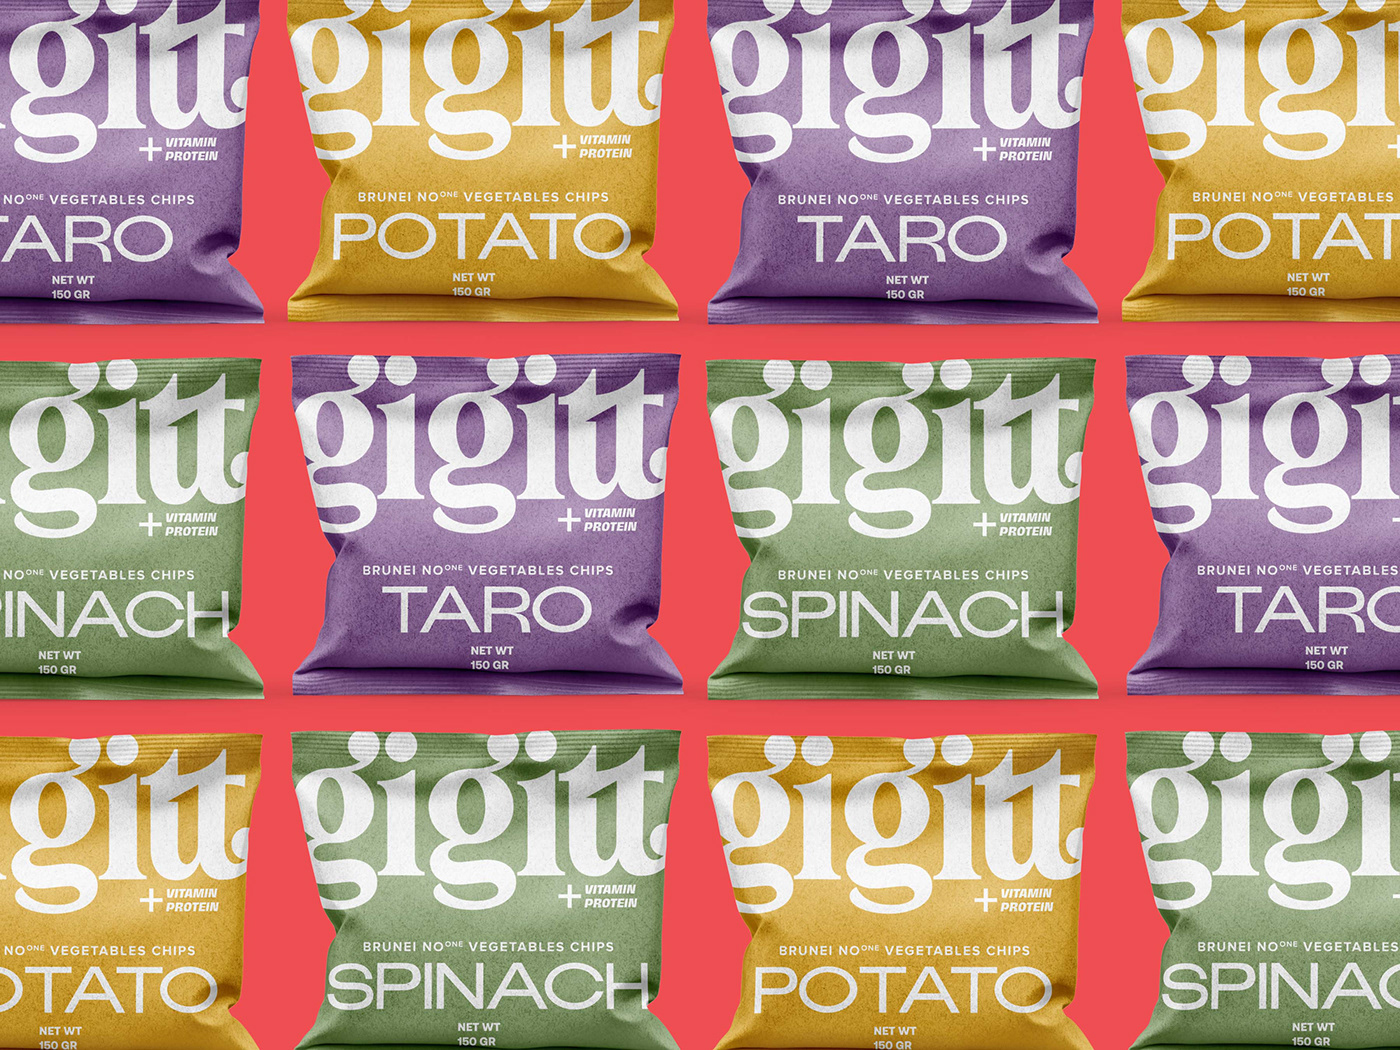 snack snacks snack food potato chips vegetables snack Healthy Snack  snack packaging branding  packaging design branding agency jakarta